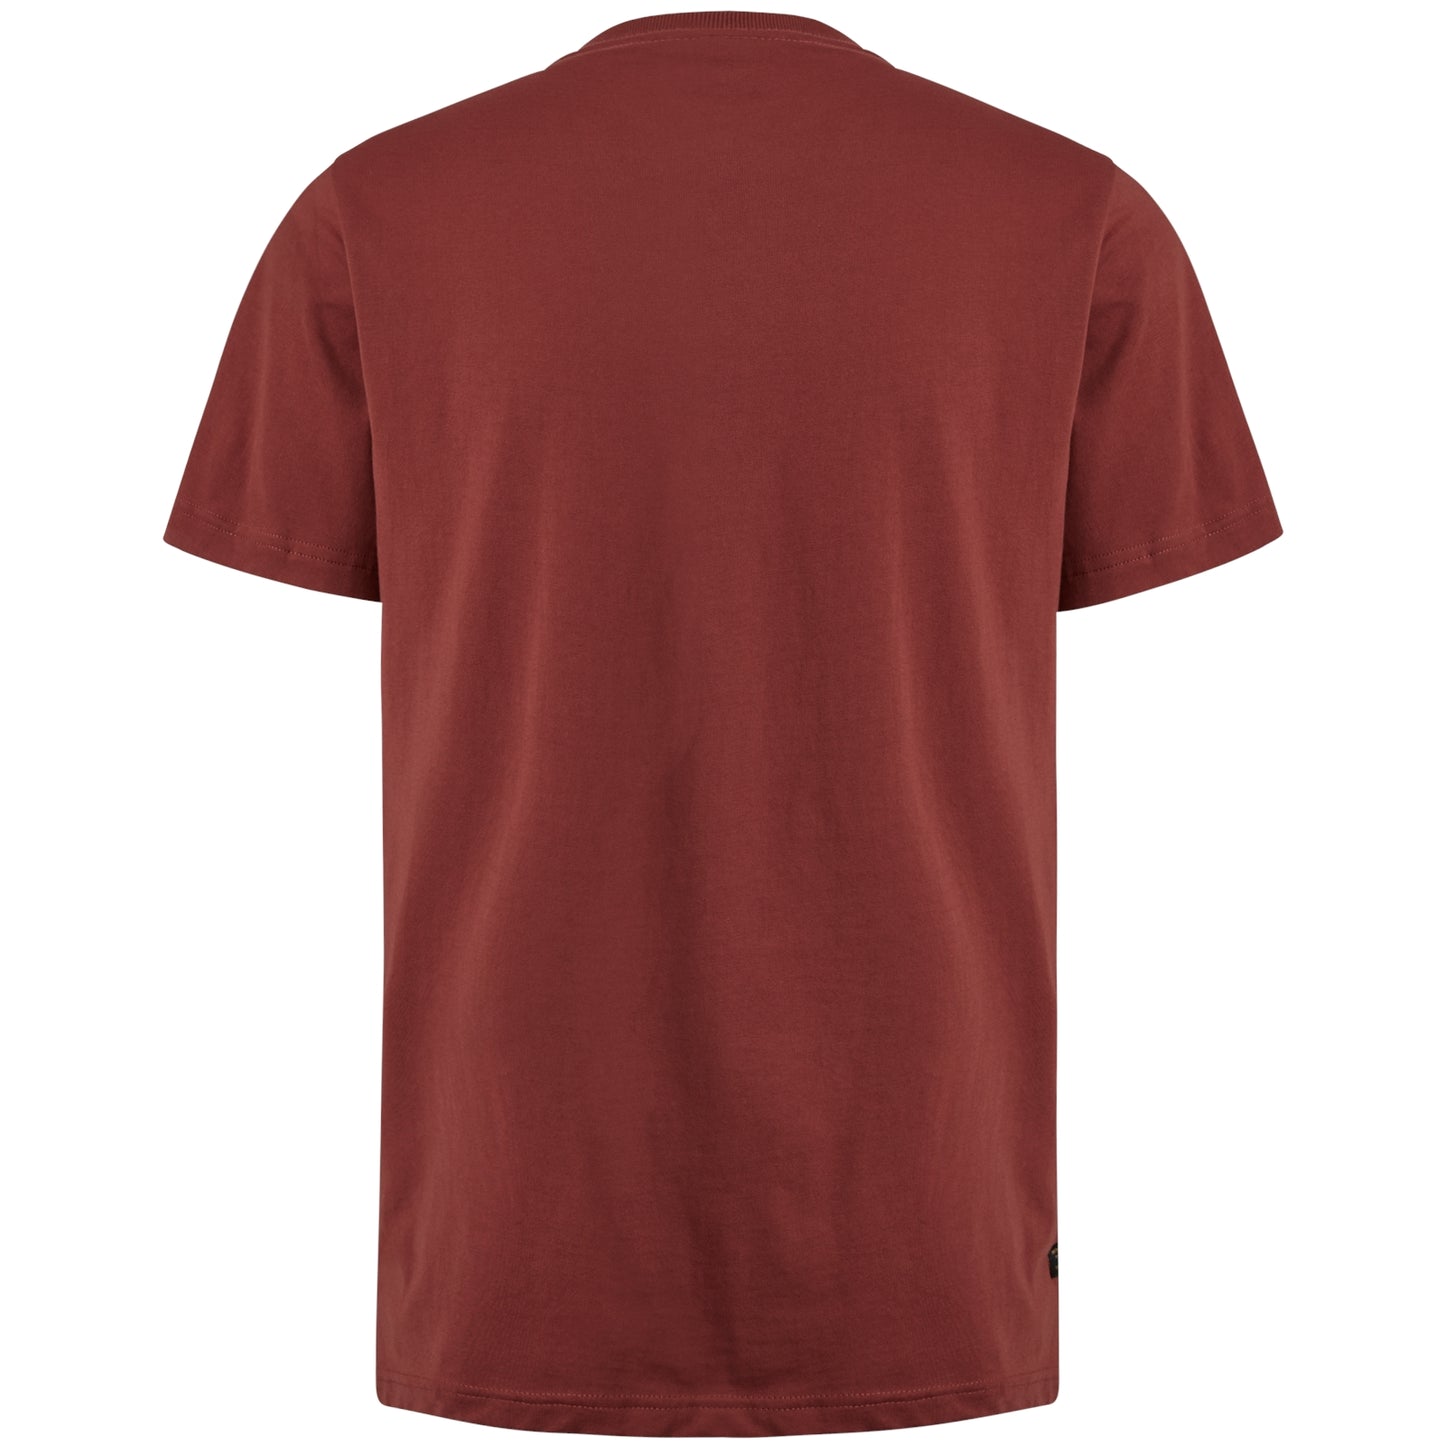 Short sleeve r-neck single jersey - PTSS2402571